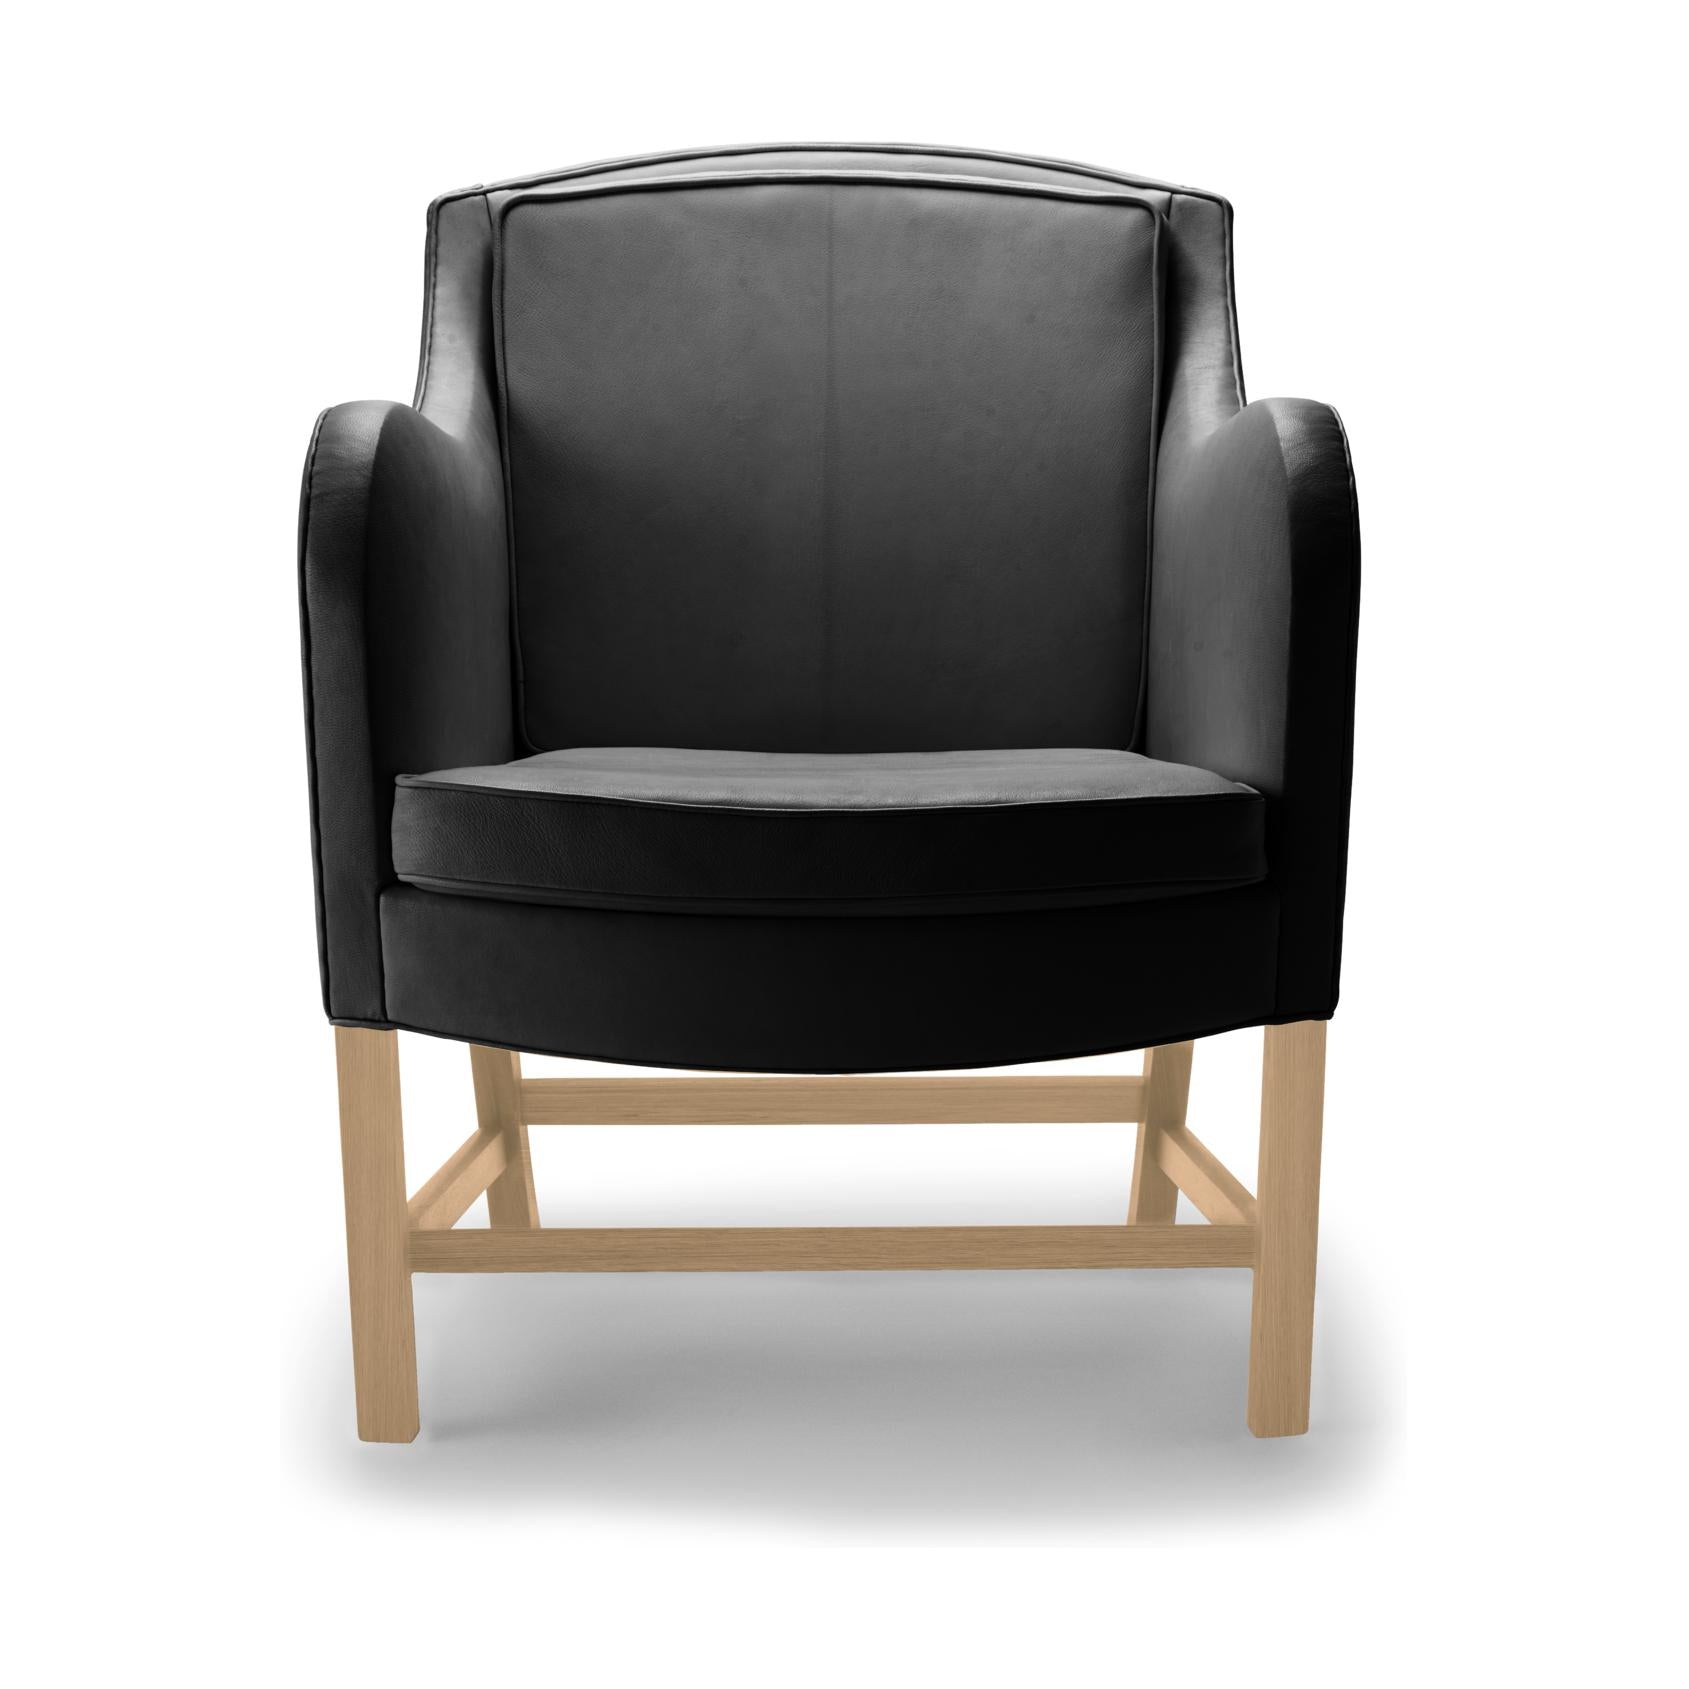 Carl Hansen KK43960 Mélange Chaise Lounge, chêne huilé / cuir noir